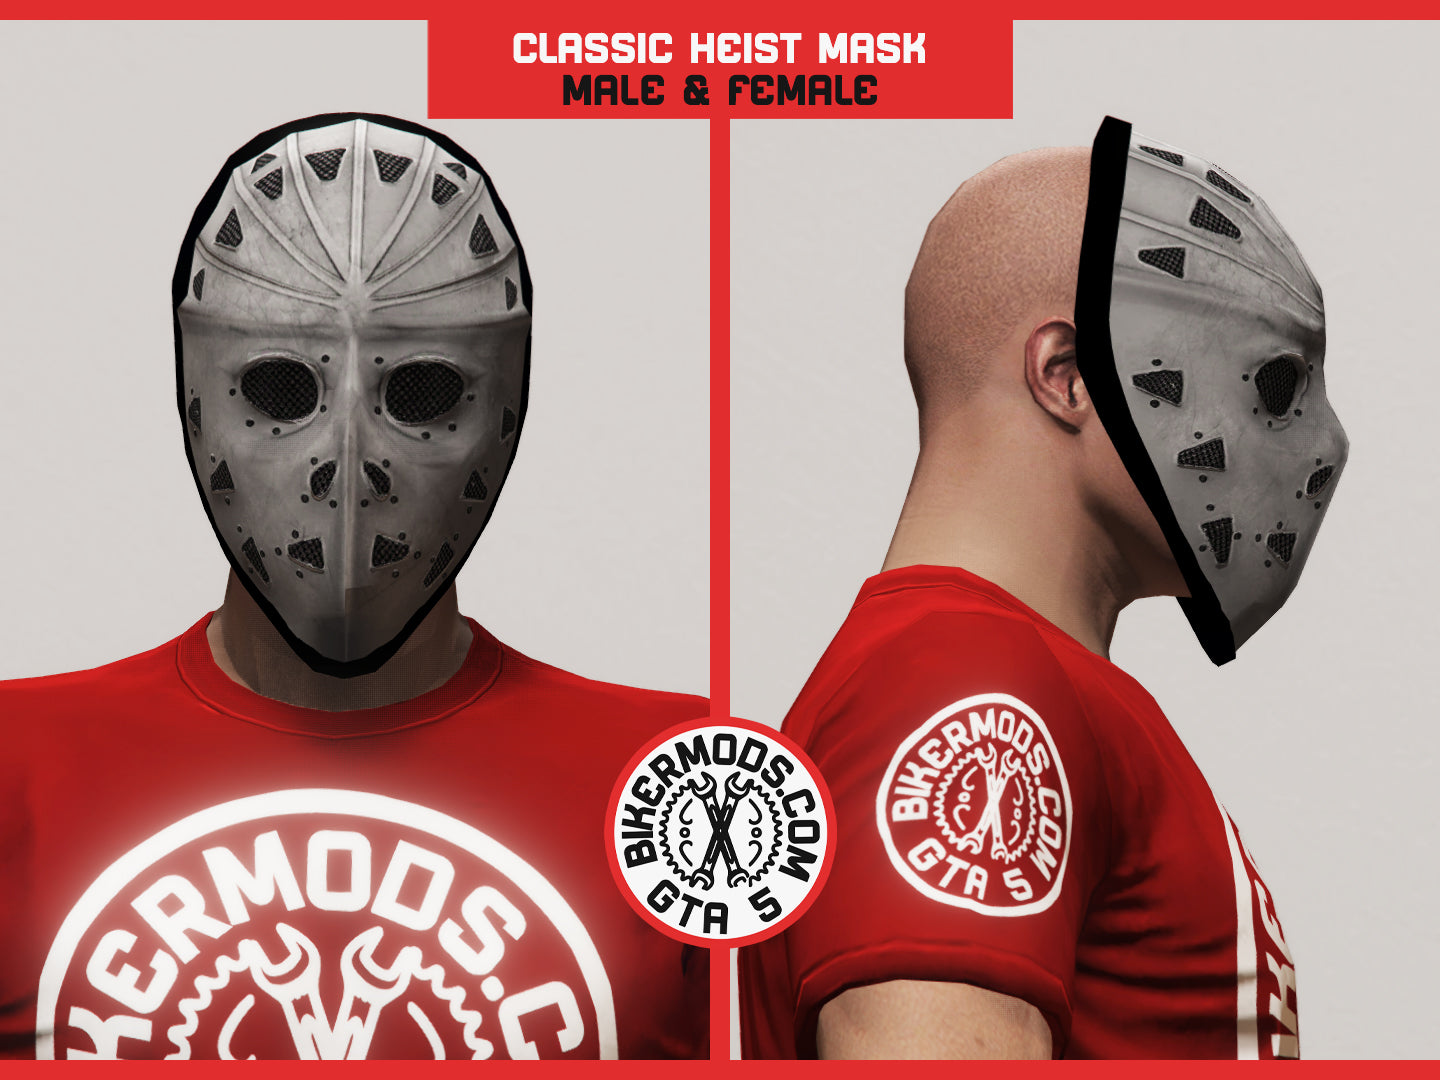 Classic Heist Mask